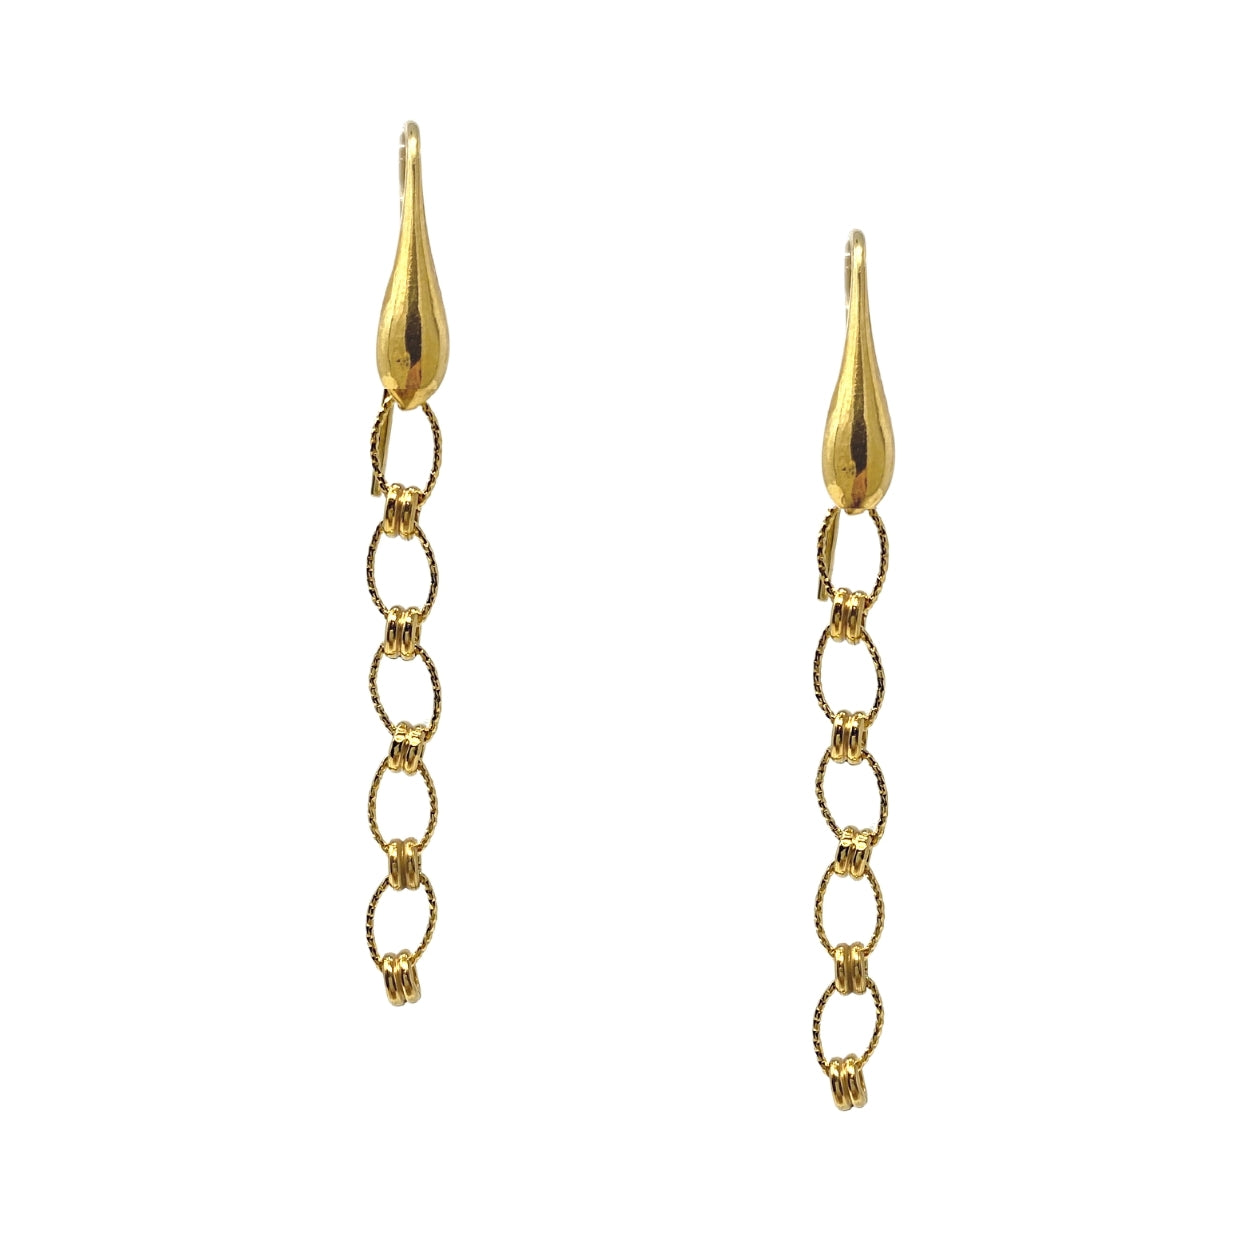 Ponte Vecchio Earrings in Gold